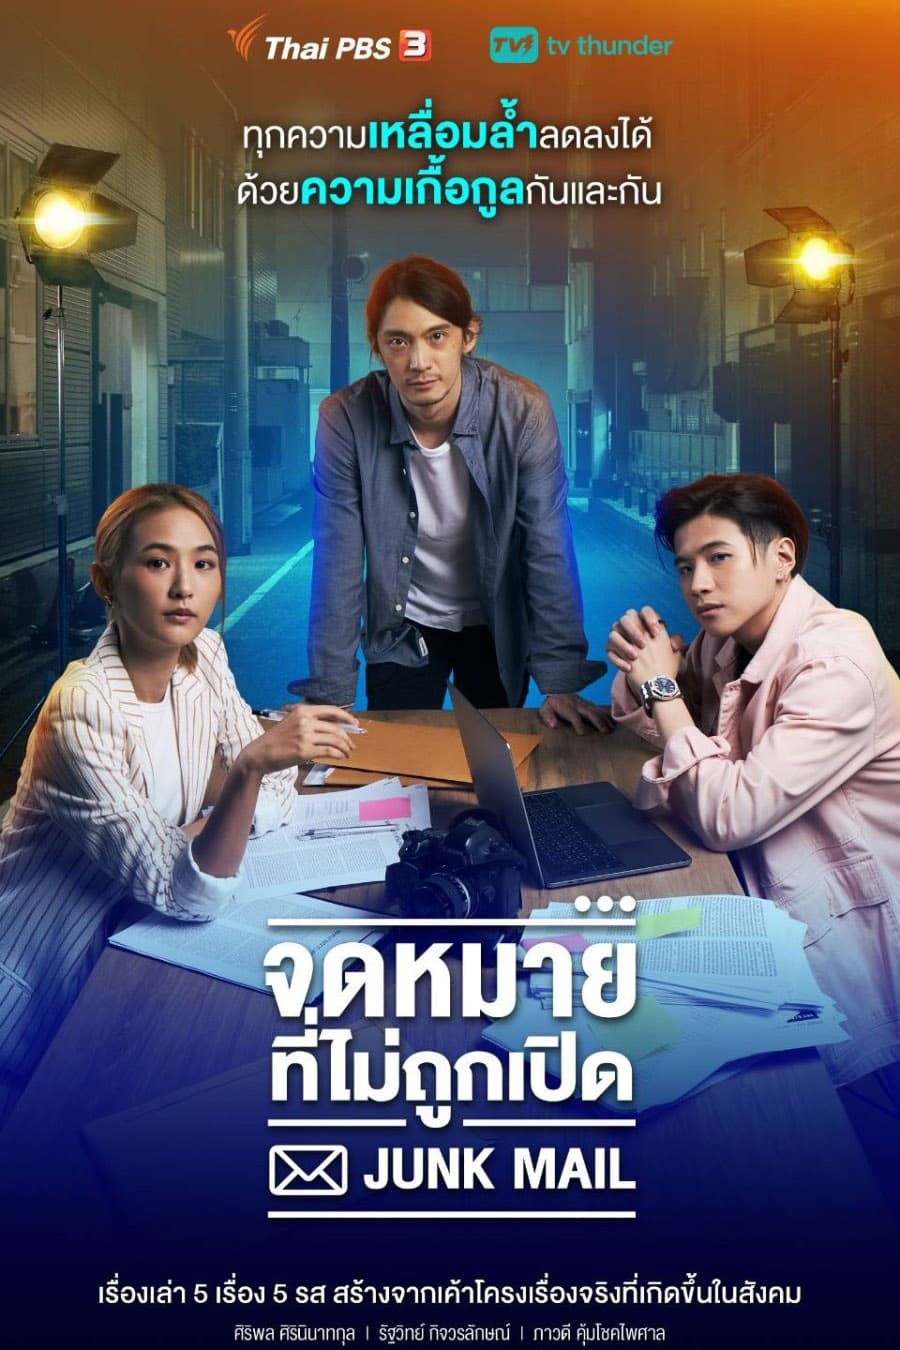 TV ratings for Junk Mail (จดหมายที่ไม่ถูกเปิด) in los Estados Unidos. Thai PBS TV series